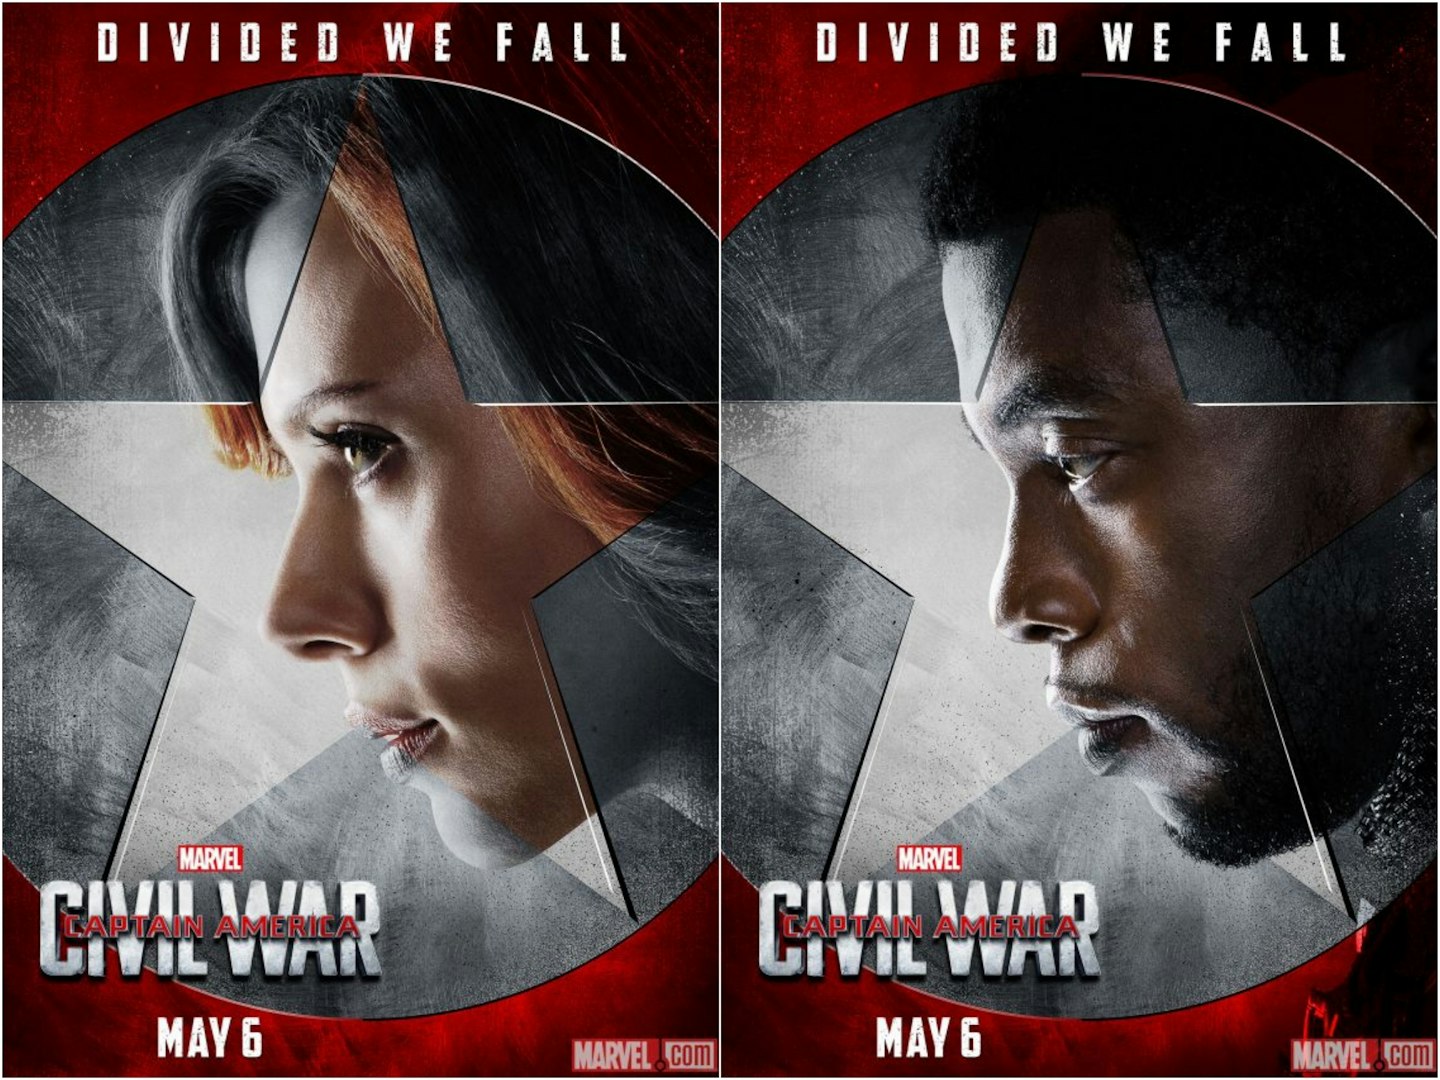 Captain America: Civil War Team Iron Man posters